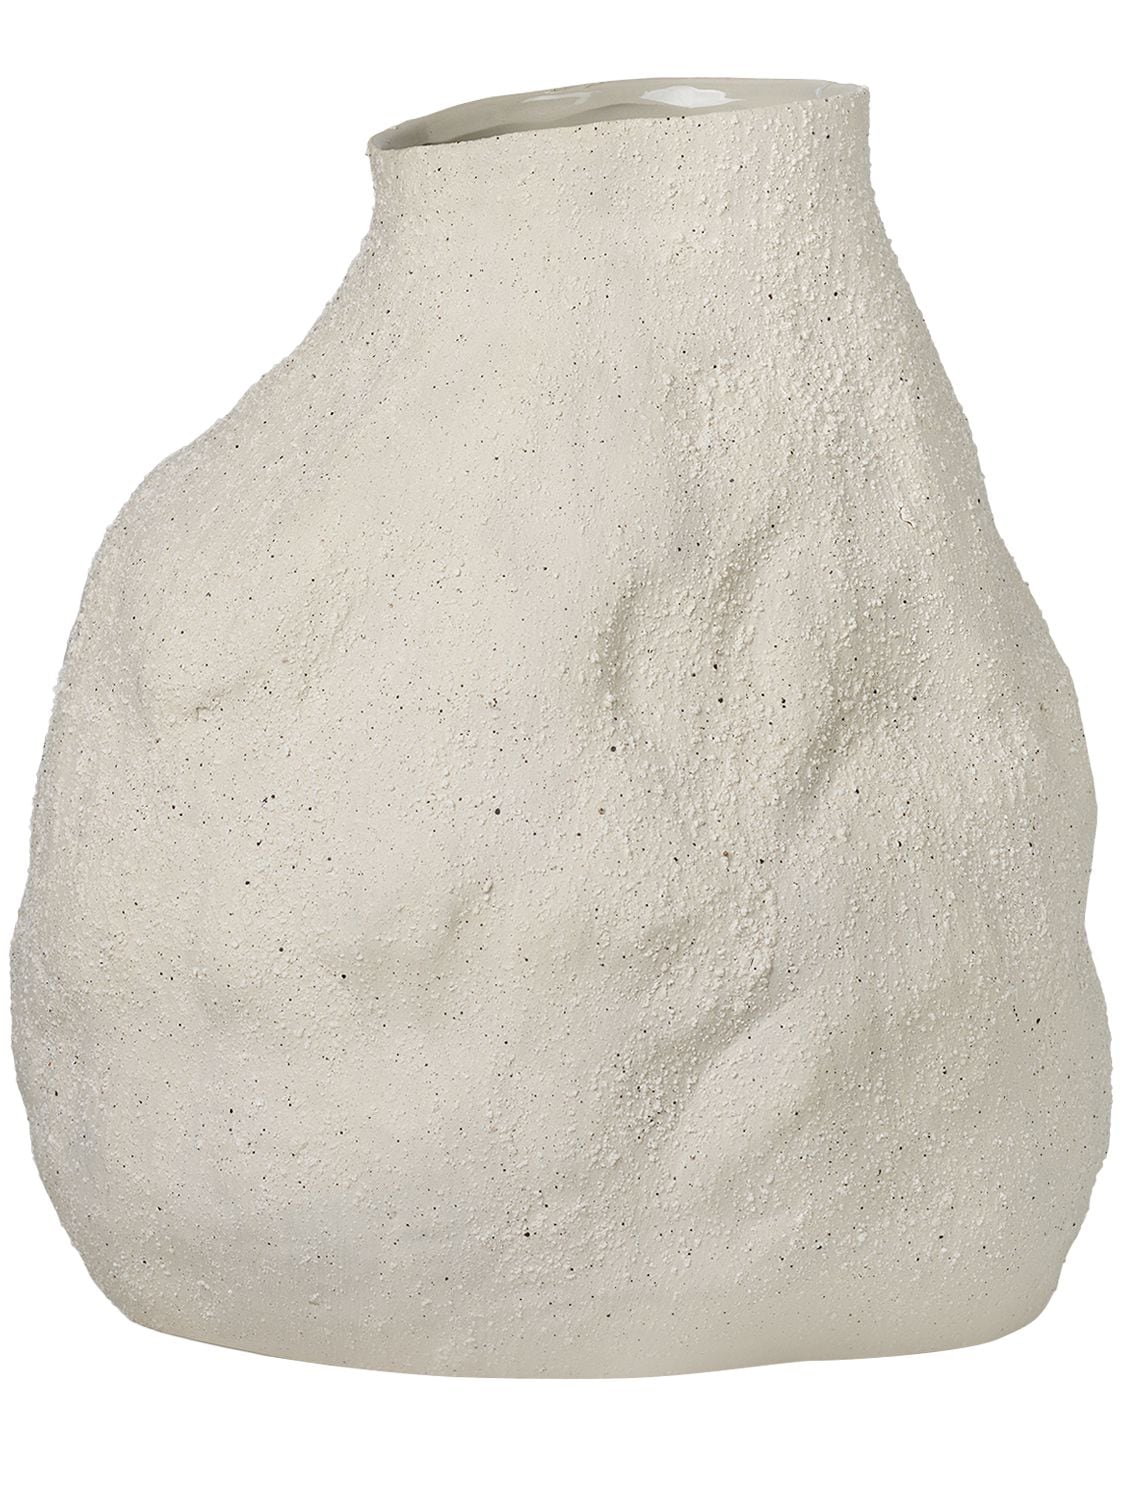 Ferm Living Medium Vulca Stone Vase In Beige,white